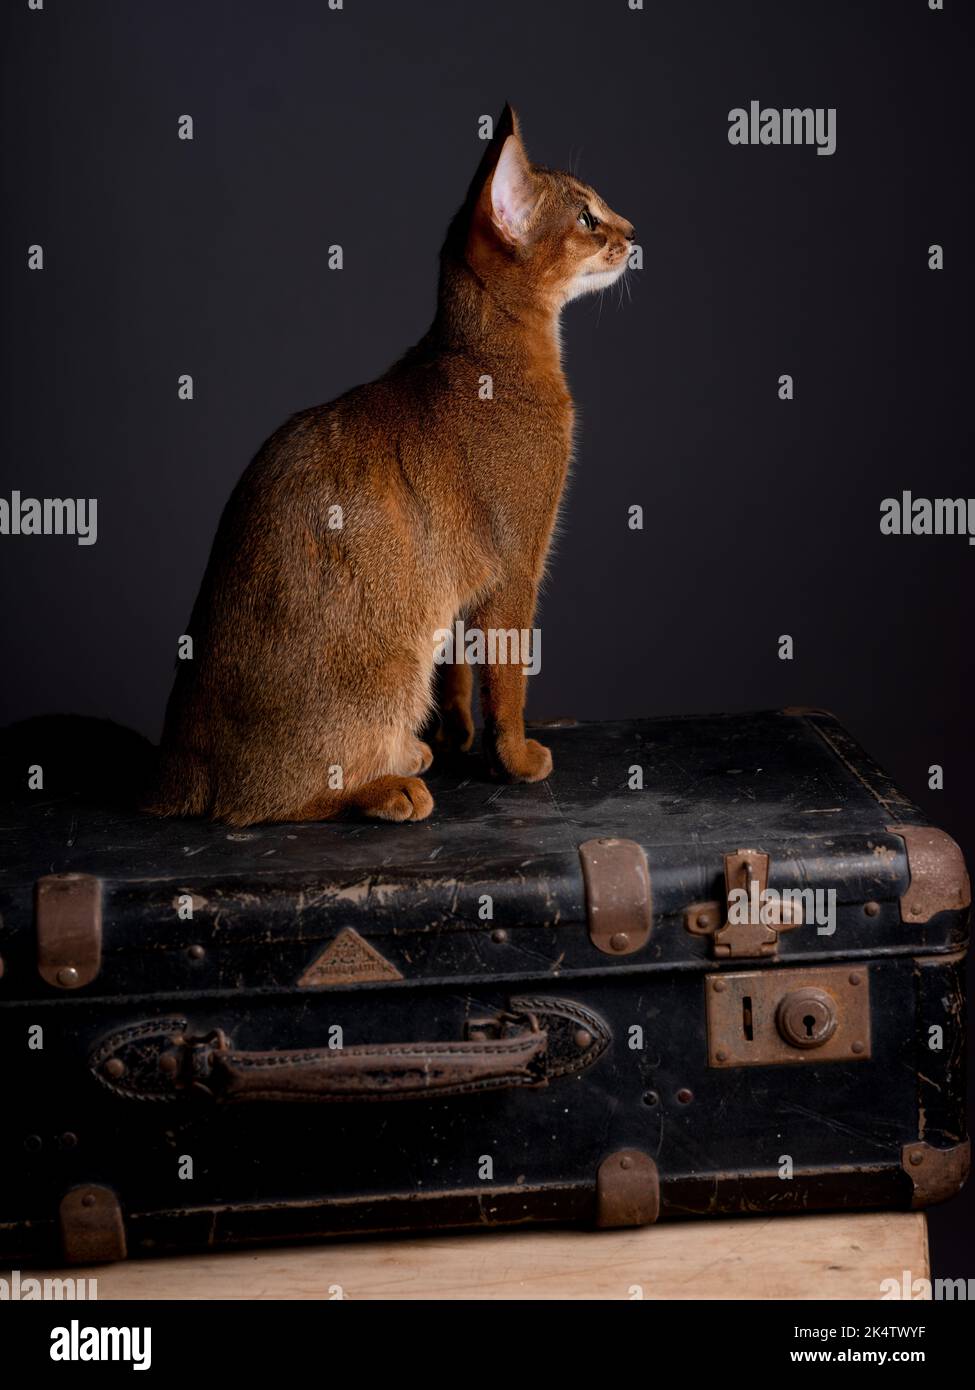 Curioso gato abisino Kitten y maleta vieja Foto de stock